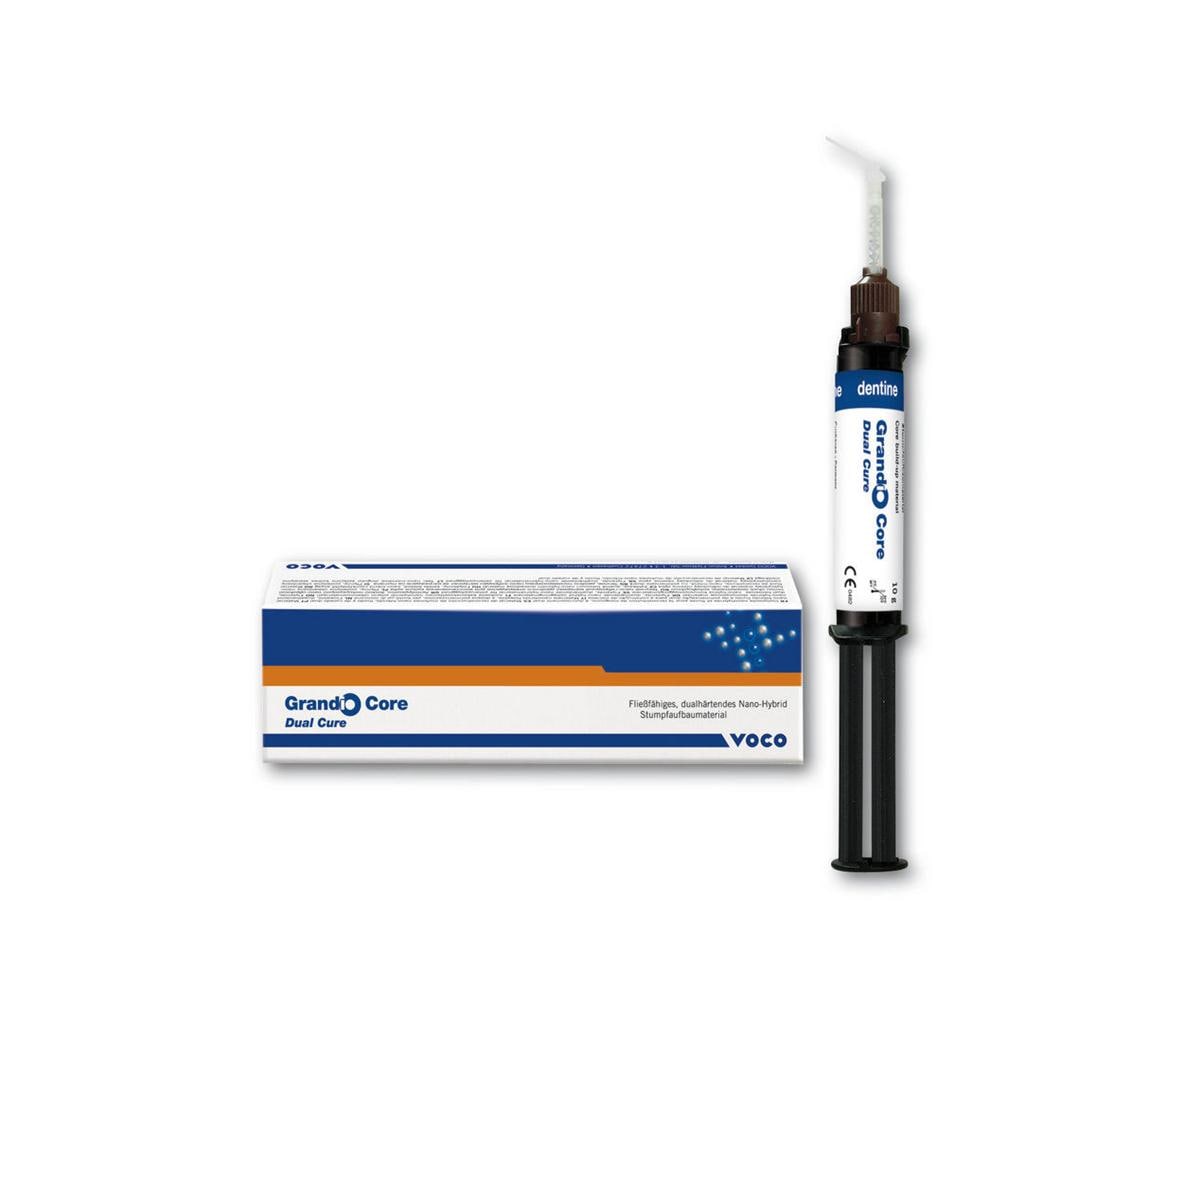 Grandio® Core Dual Cure, Spritze - Blau, QuickMix Spritze 10 g